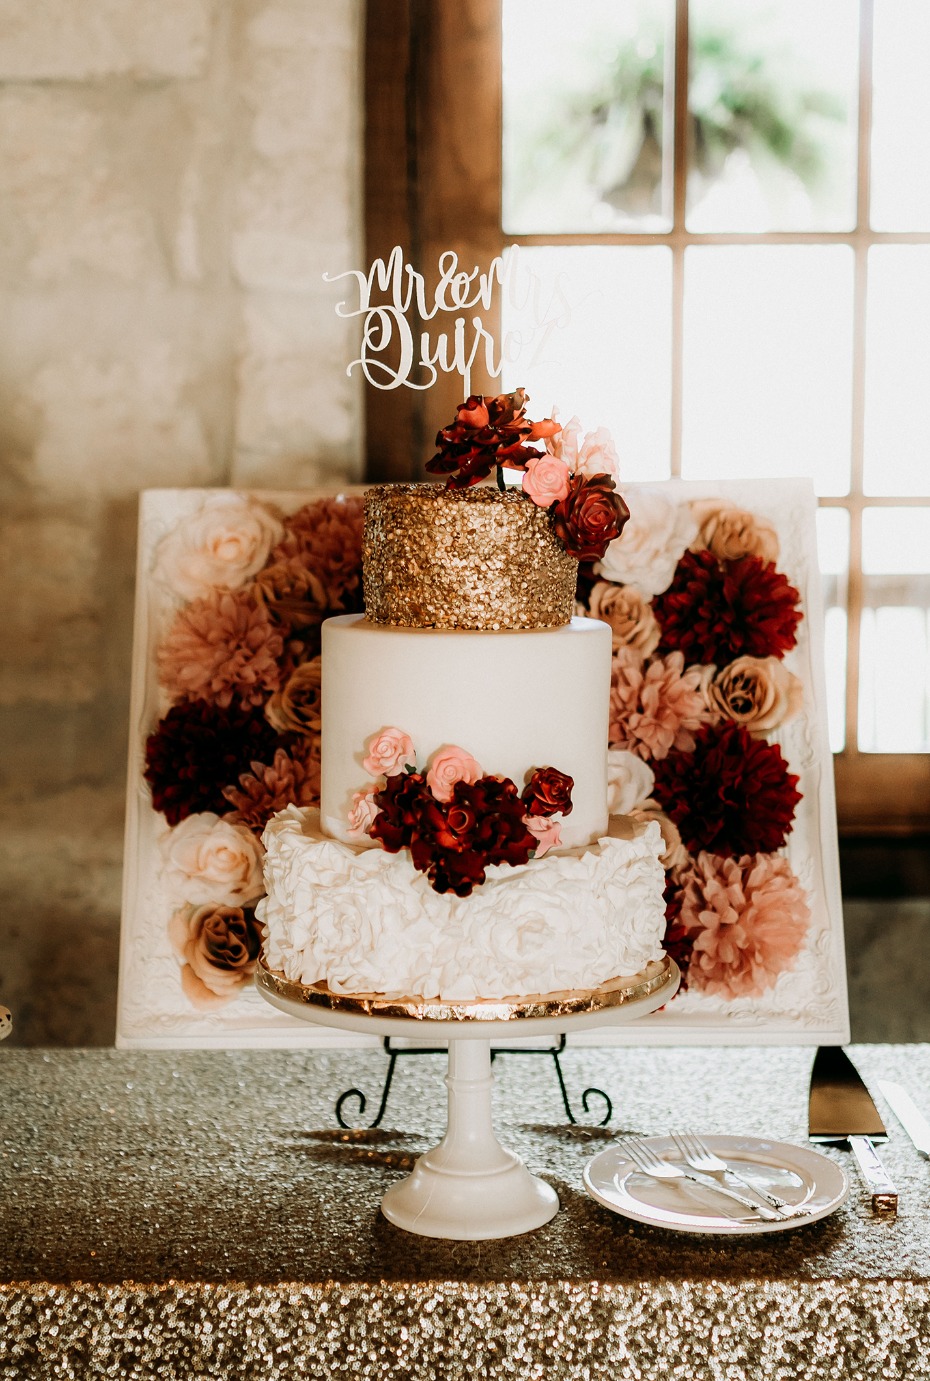 White, gold, and burgundy wedding cake